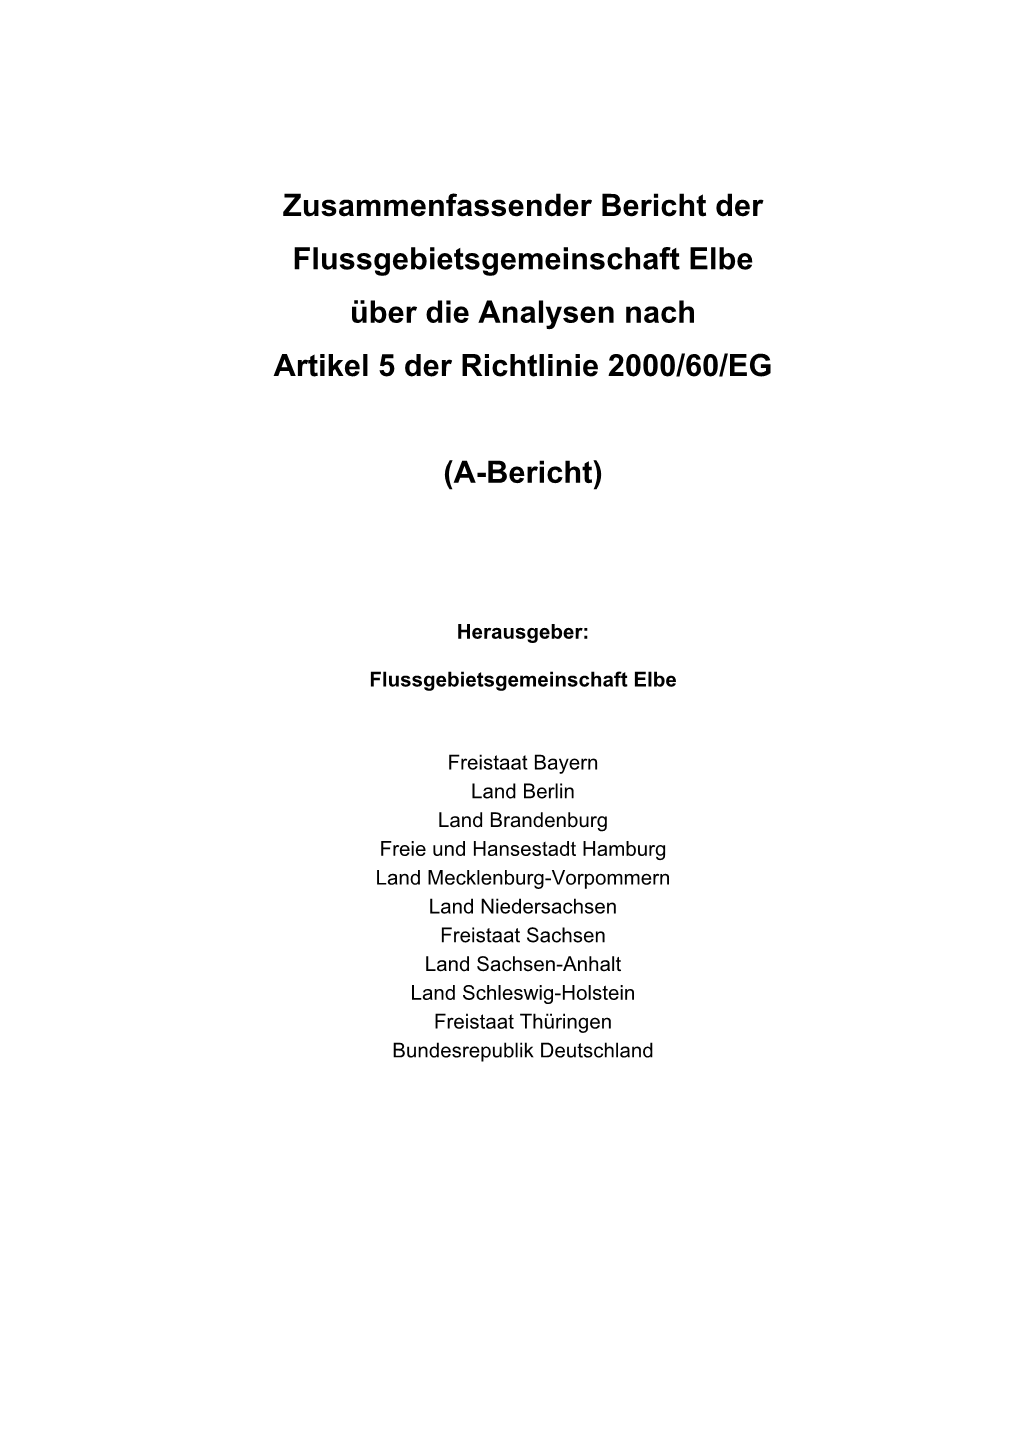 A-Bericht FGG Elbe